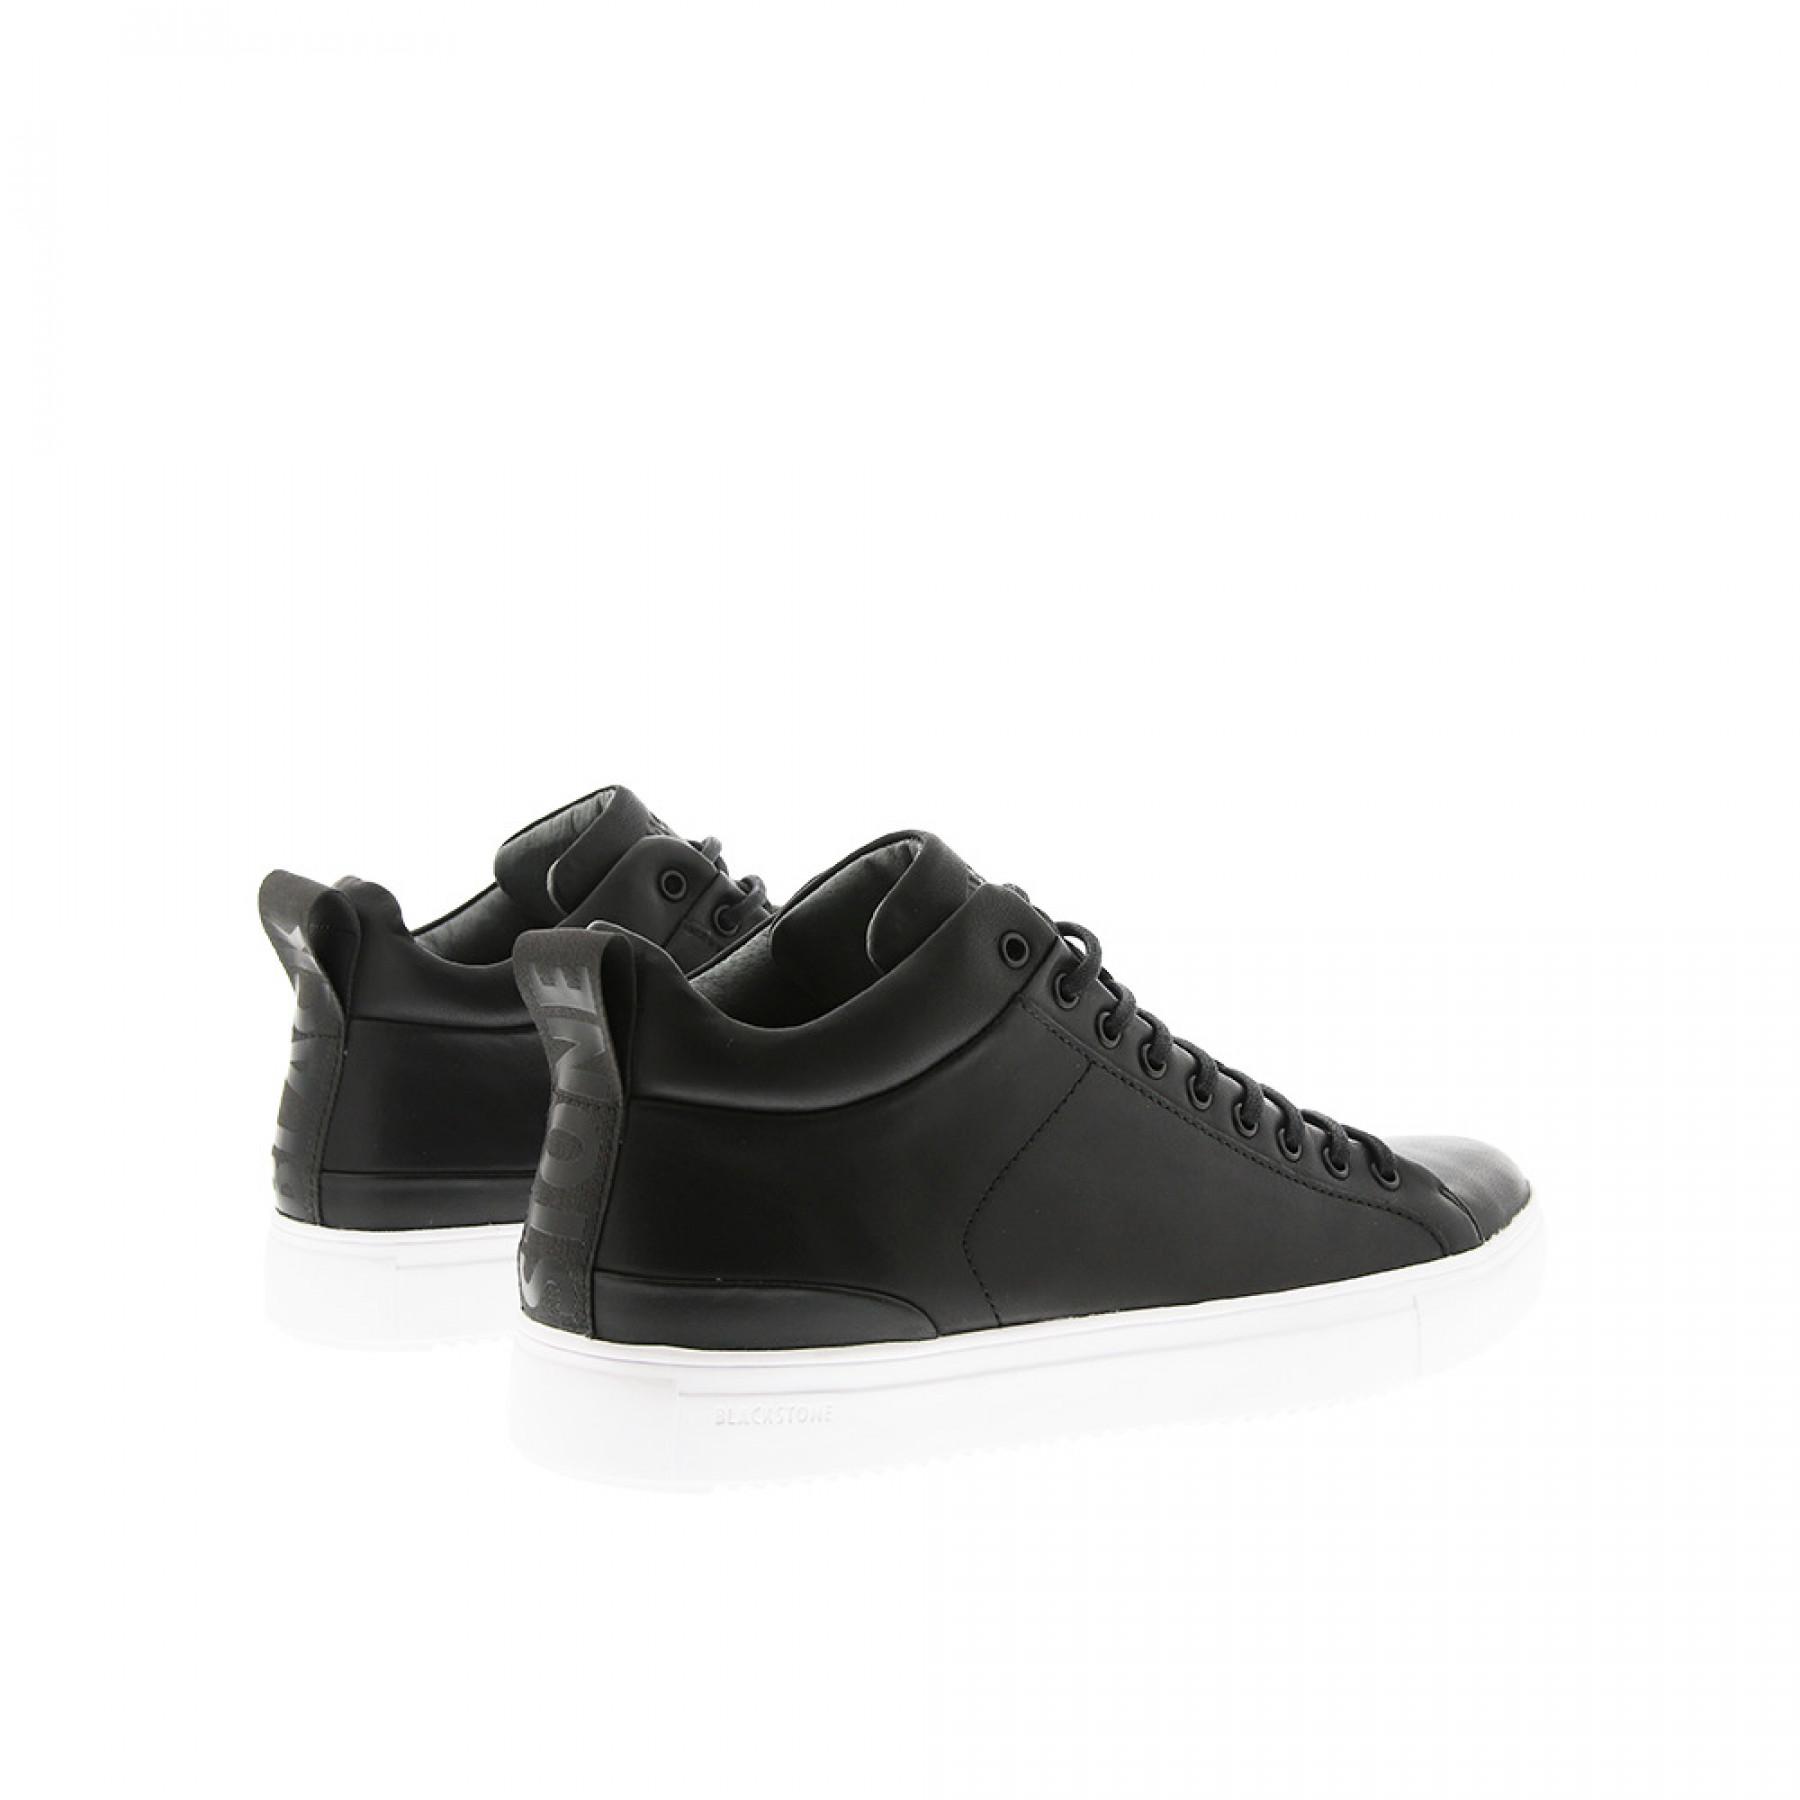 Schuhe Blackstone SG29